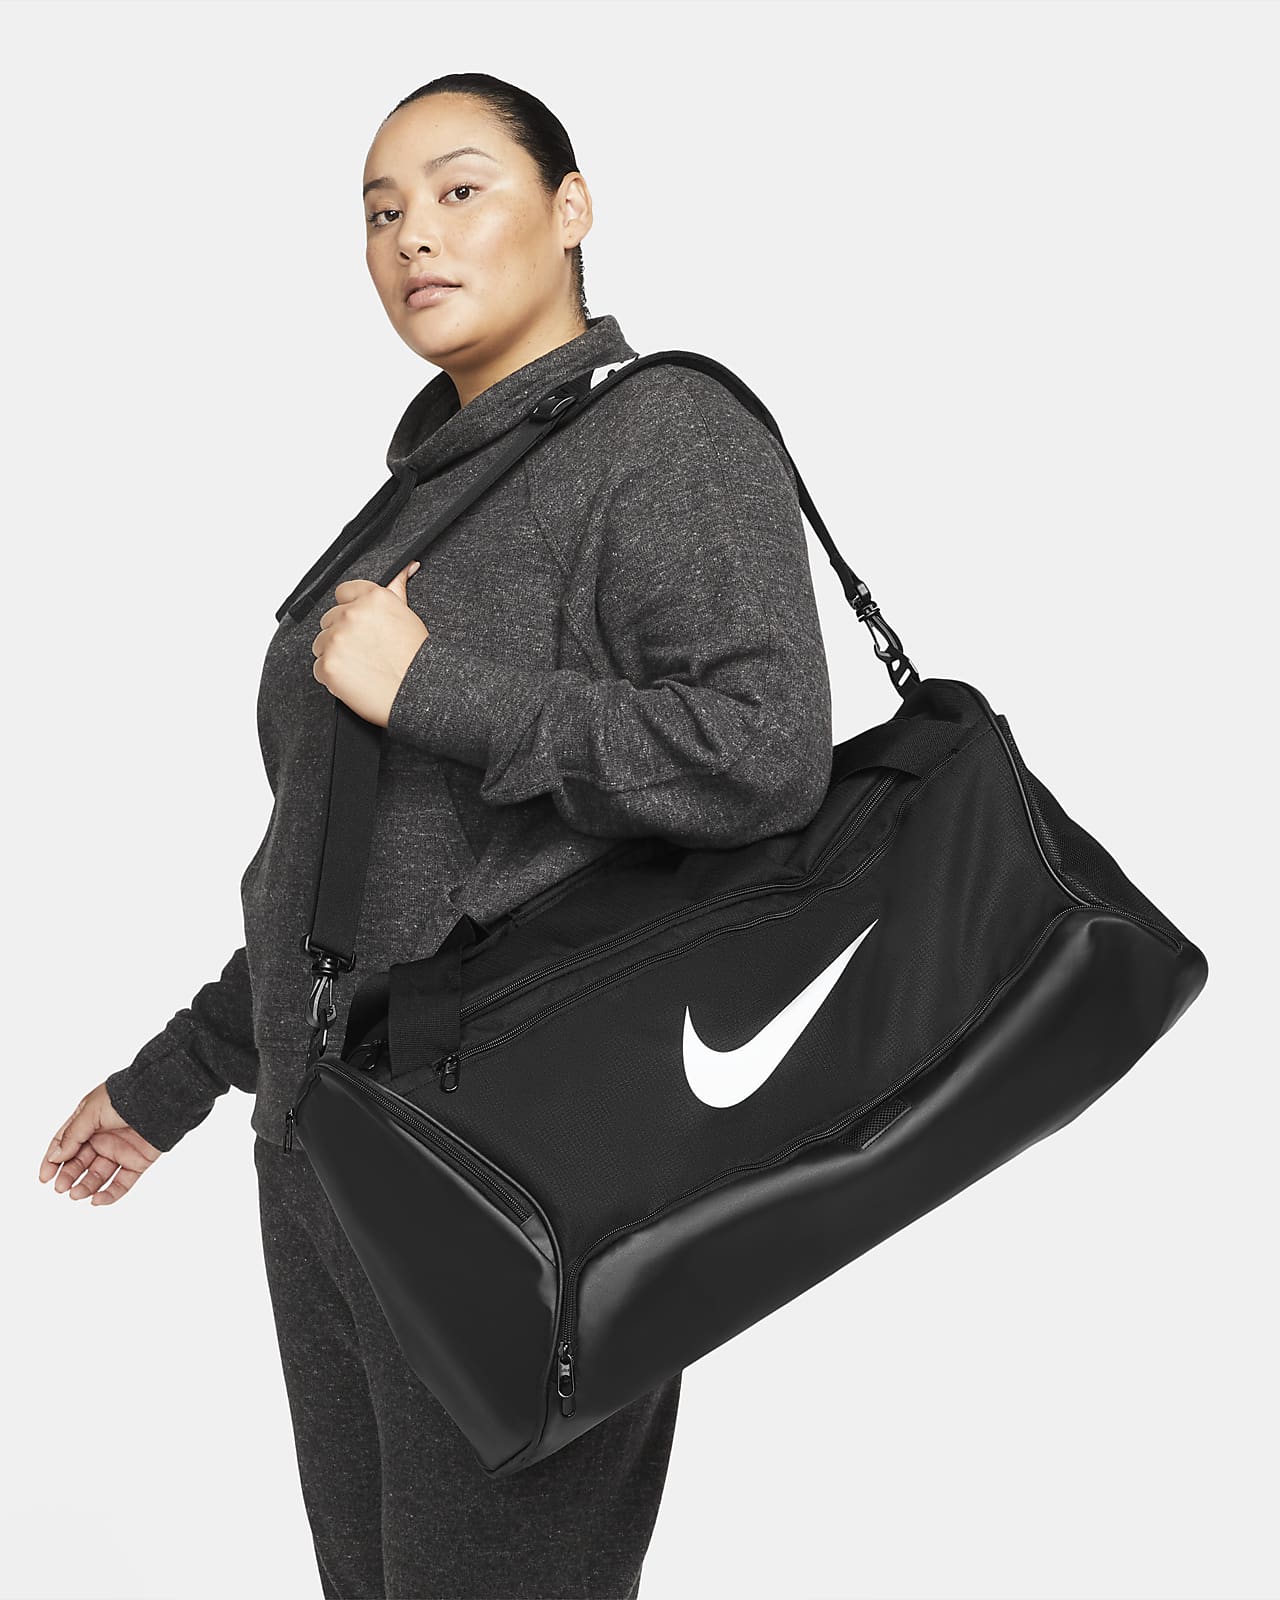 Nike Brasilia 9.5 Training Duffel Bag (Medium, 60L). Nike NL